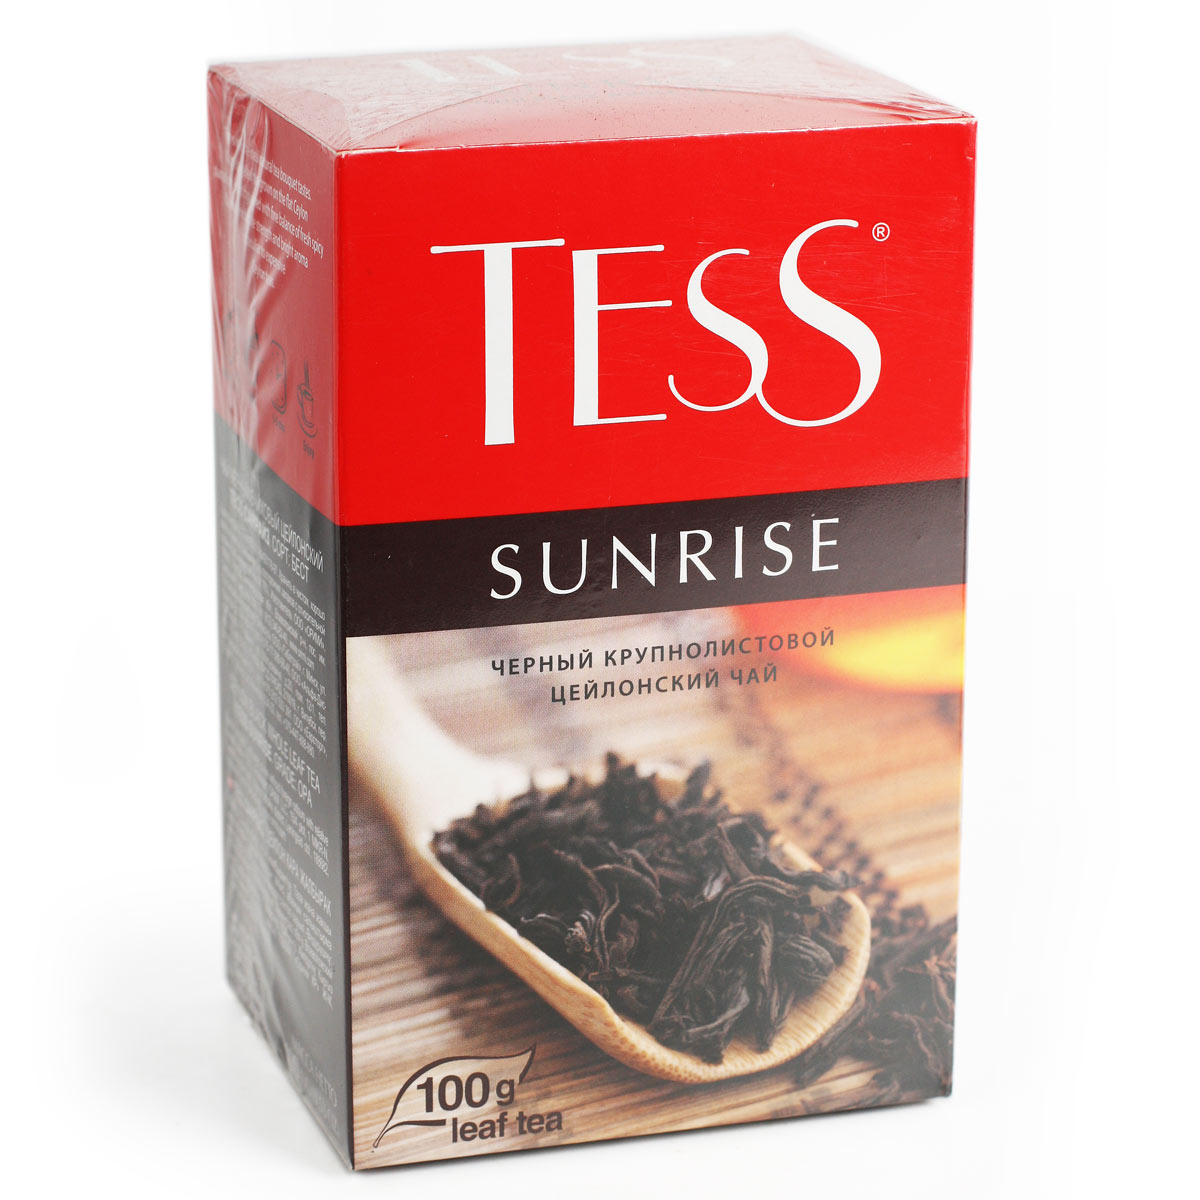 TESS SUNRISE чай Тесс Санрайз черный крупнолистовой цейлонский 100г